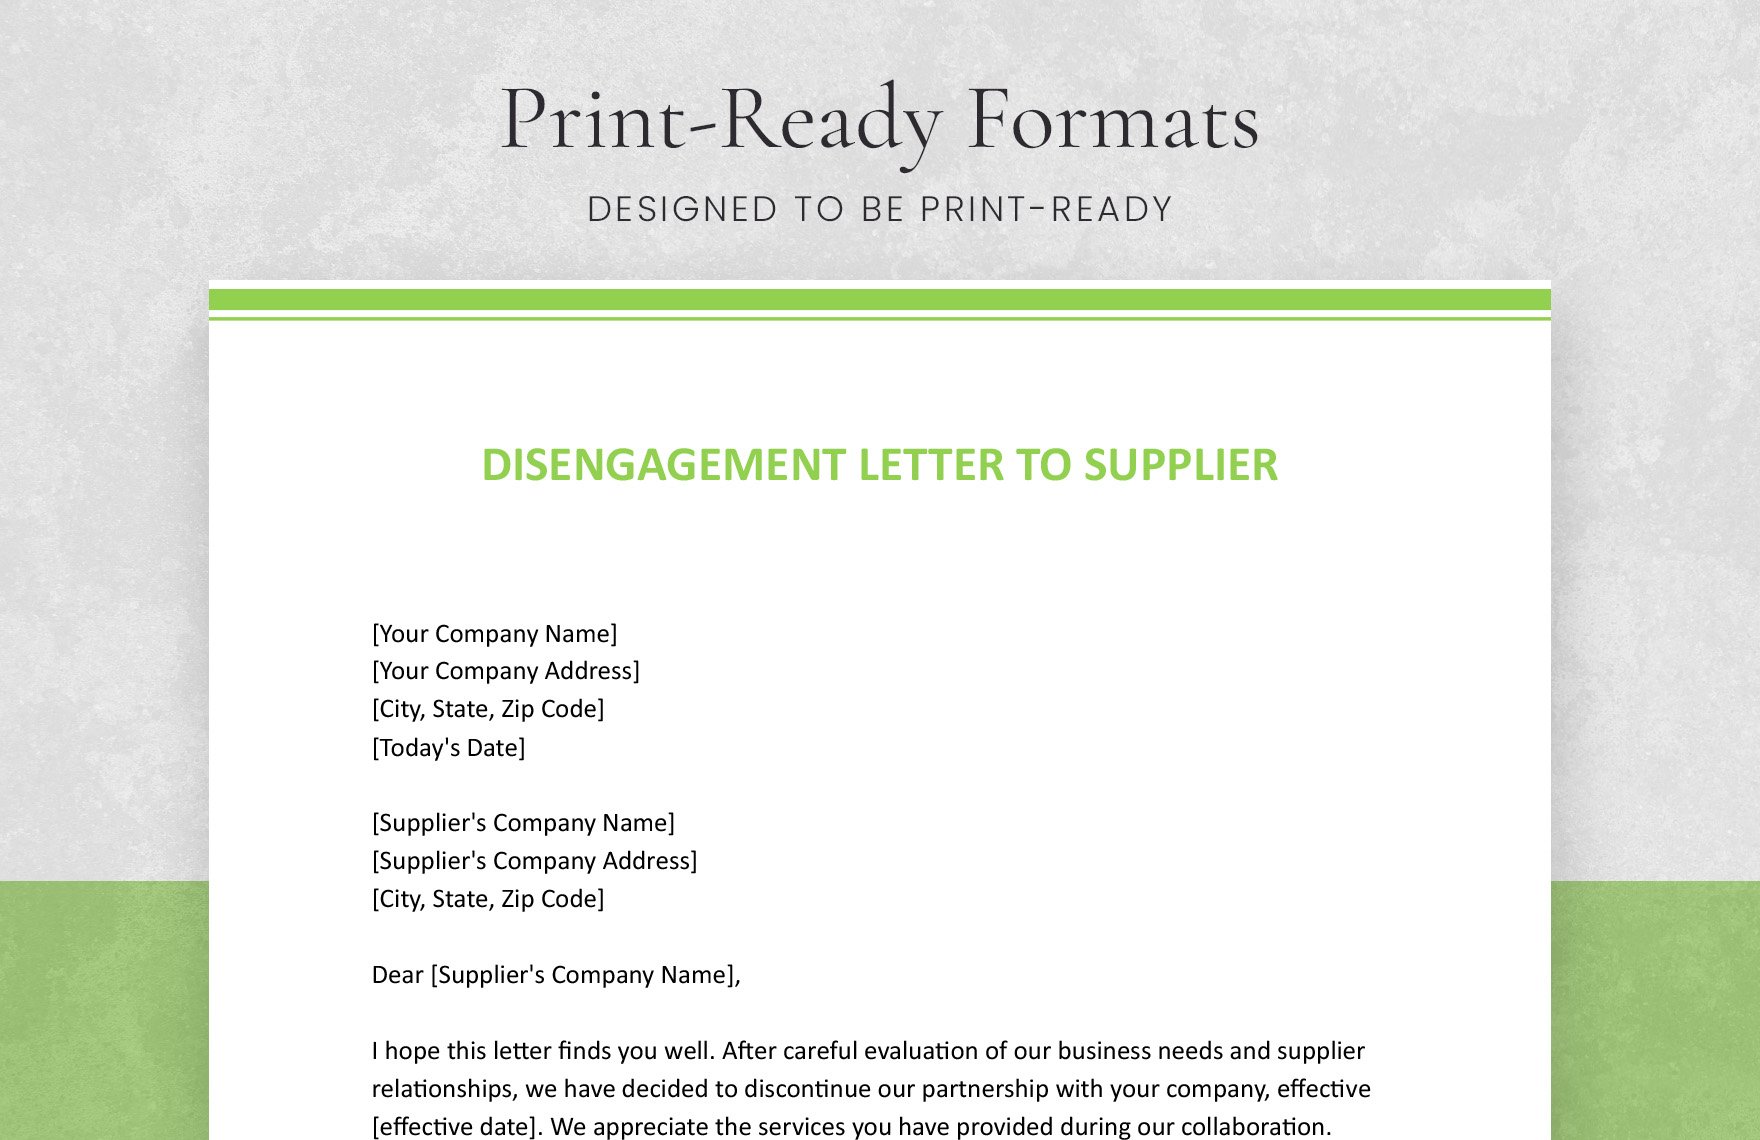 Disengagement Letter To Supplier